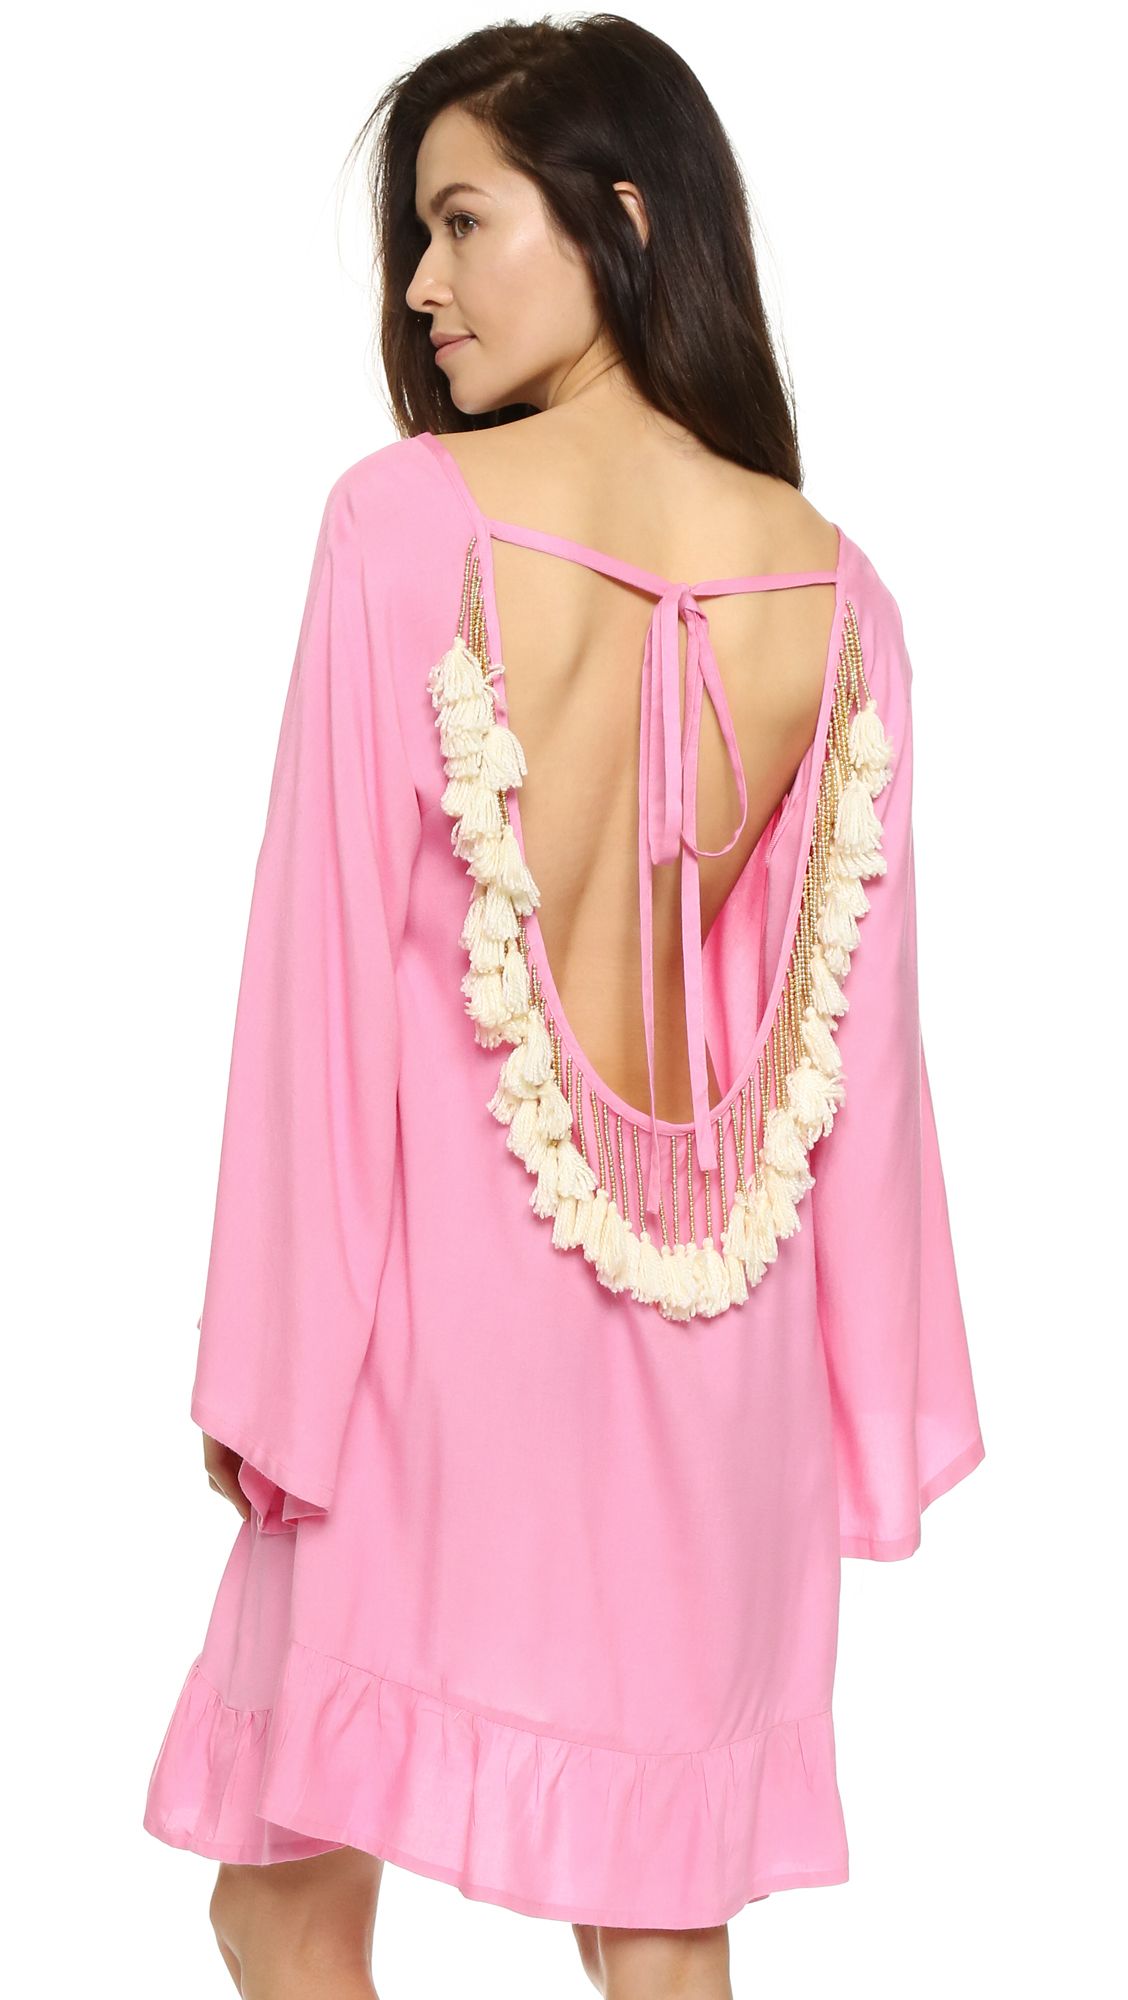 Sundress Indiana Basic Short Beach Dress - Light Pink/White | Shopbop